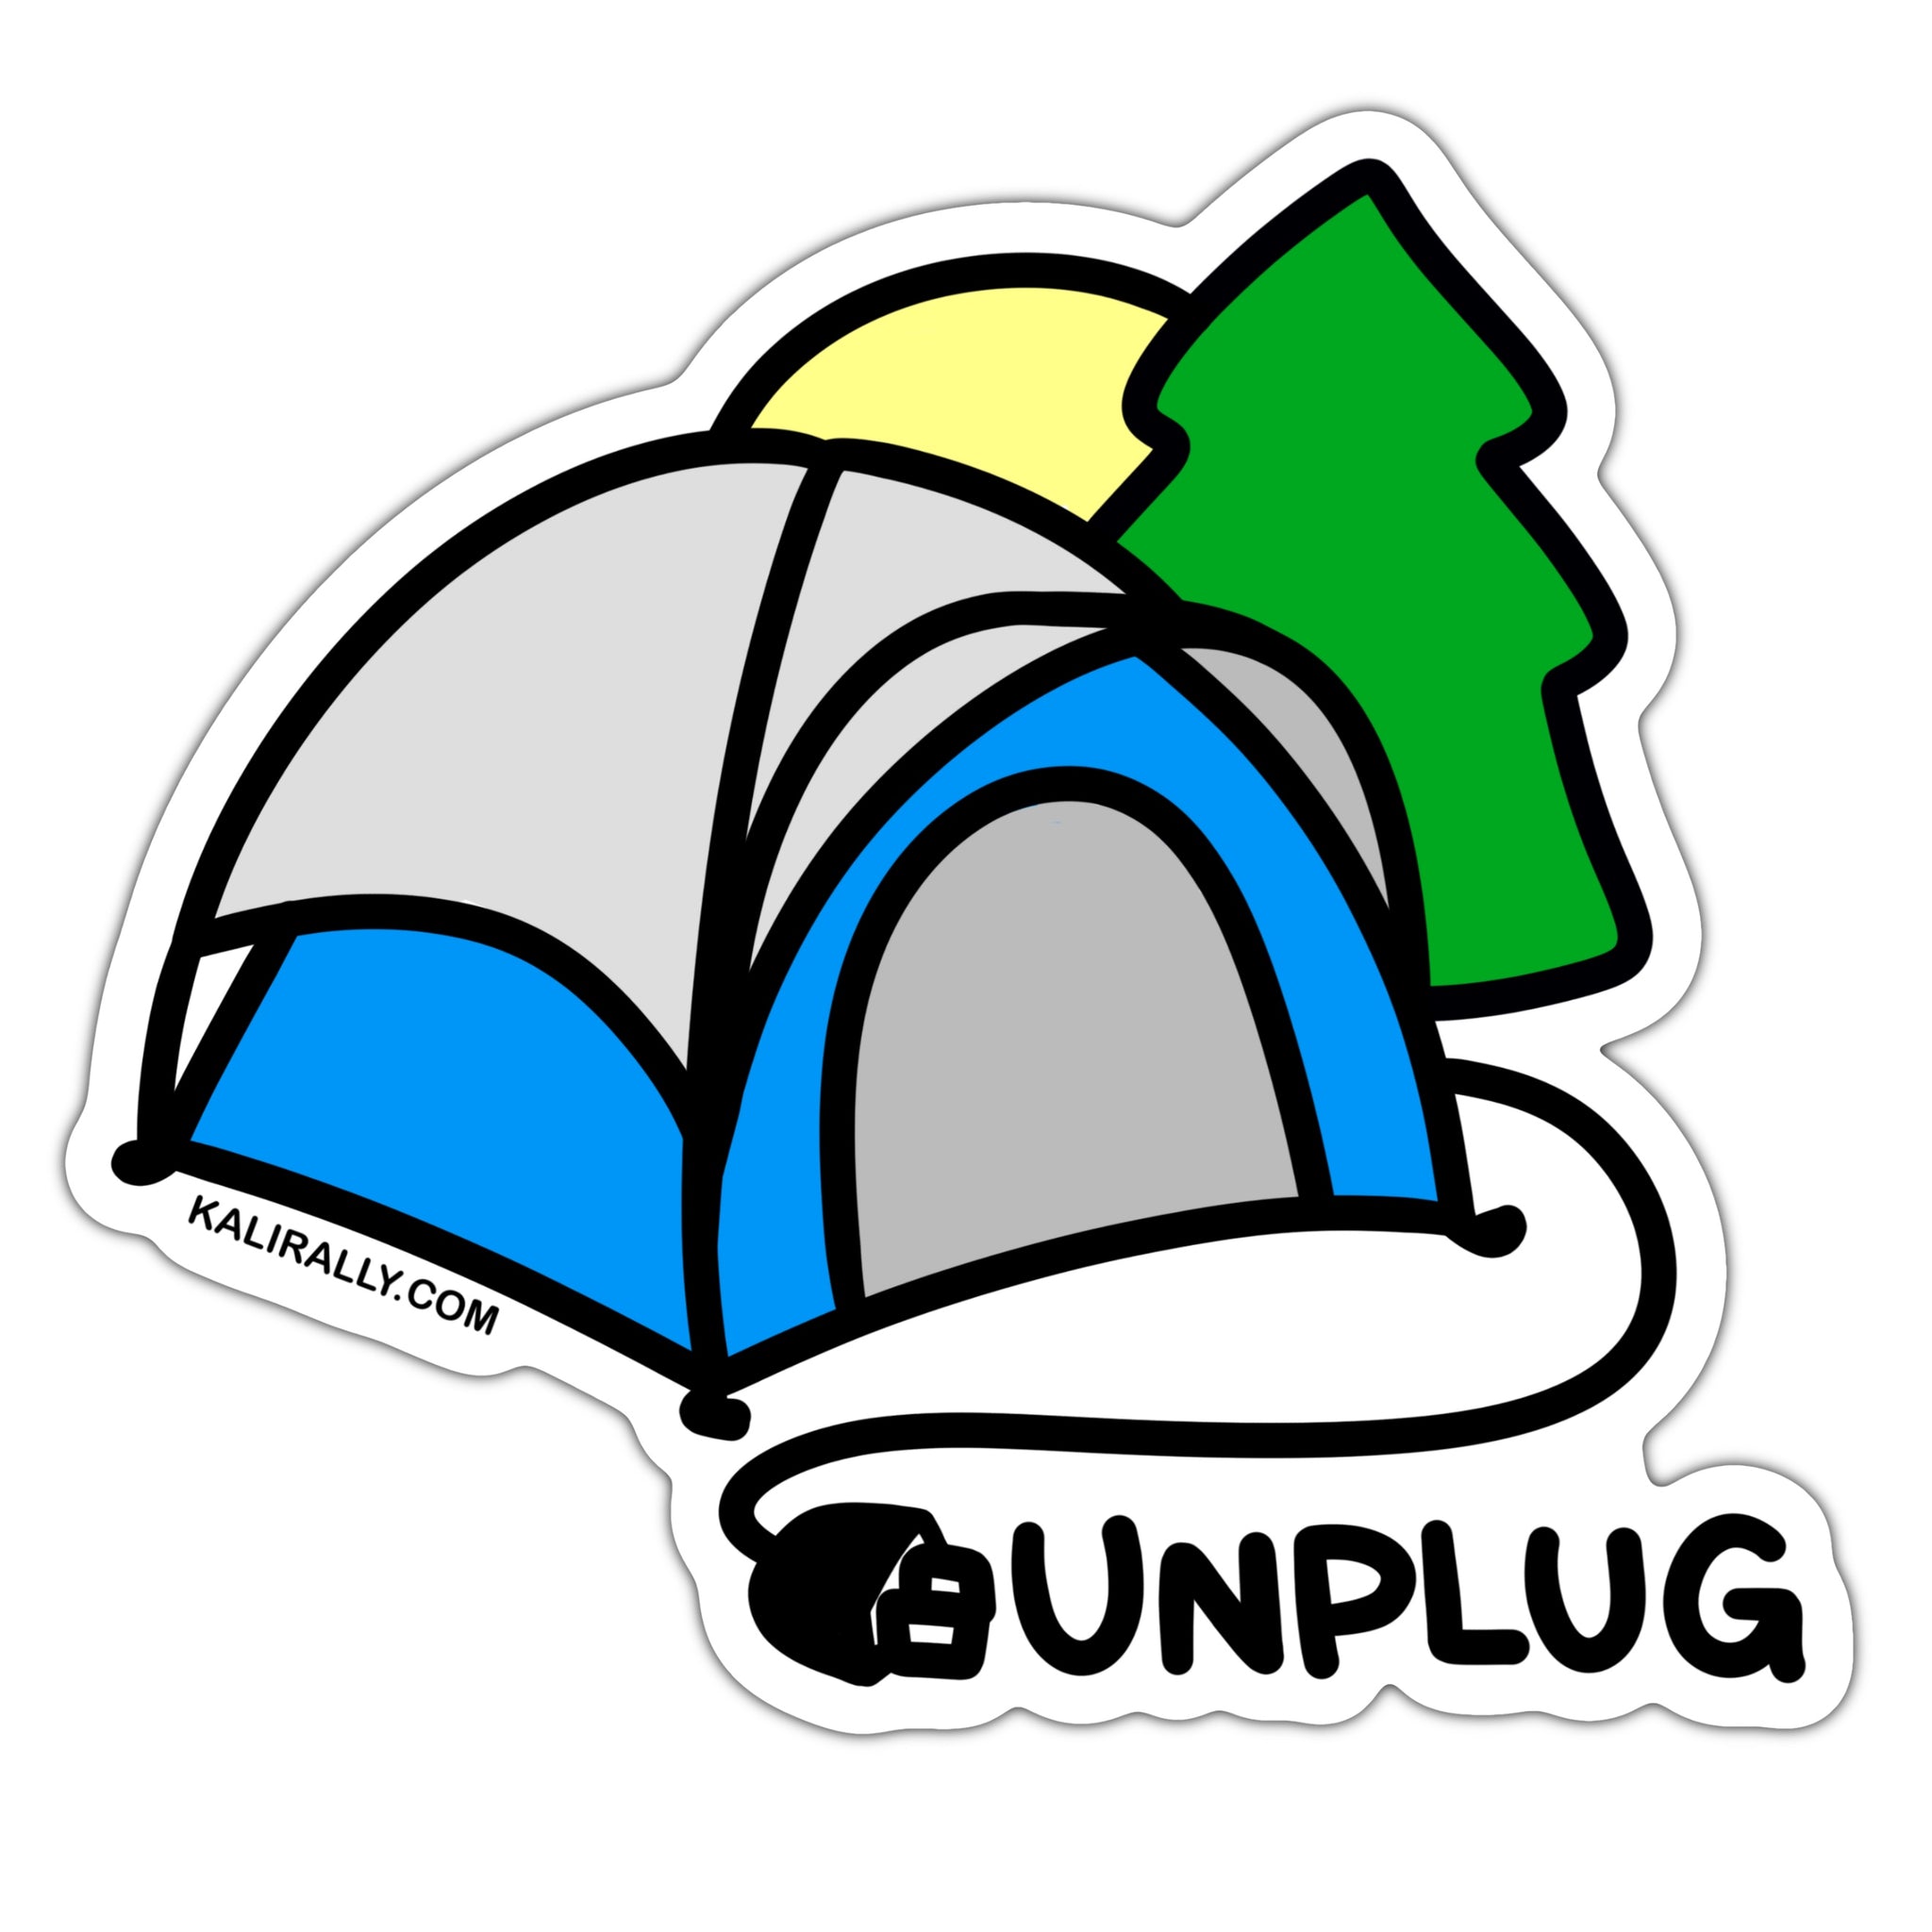 Unplug camping sticker, happy camper sticker, tent sticker, hiking sticker, waterproof vinyl sticker